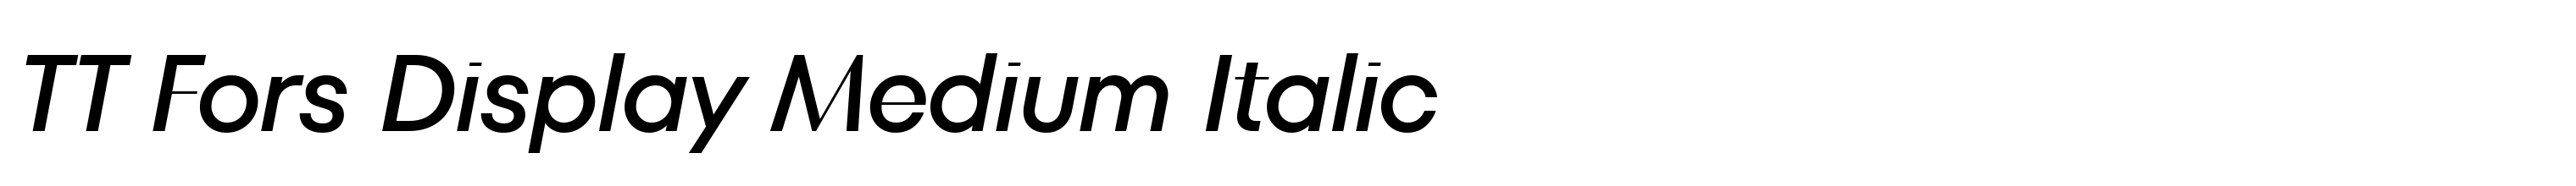 TT Fors Display Medium Italic